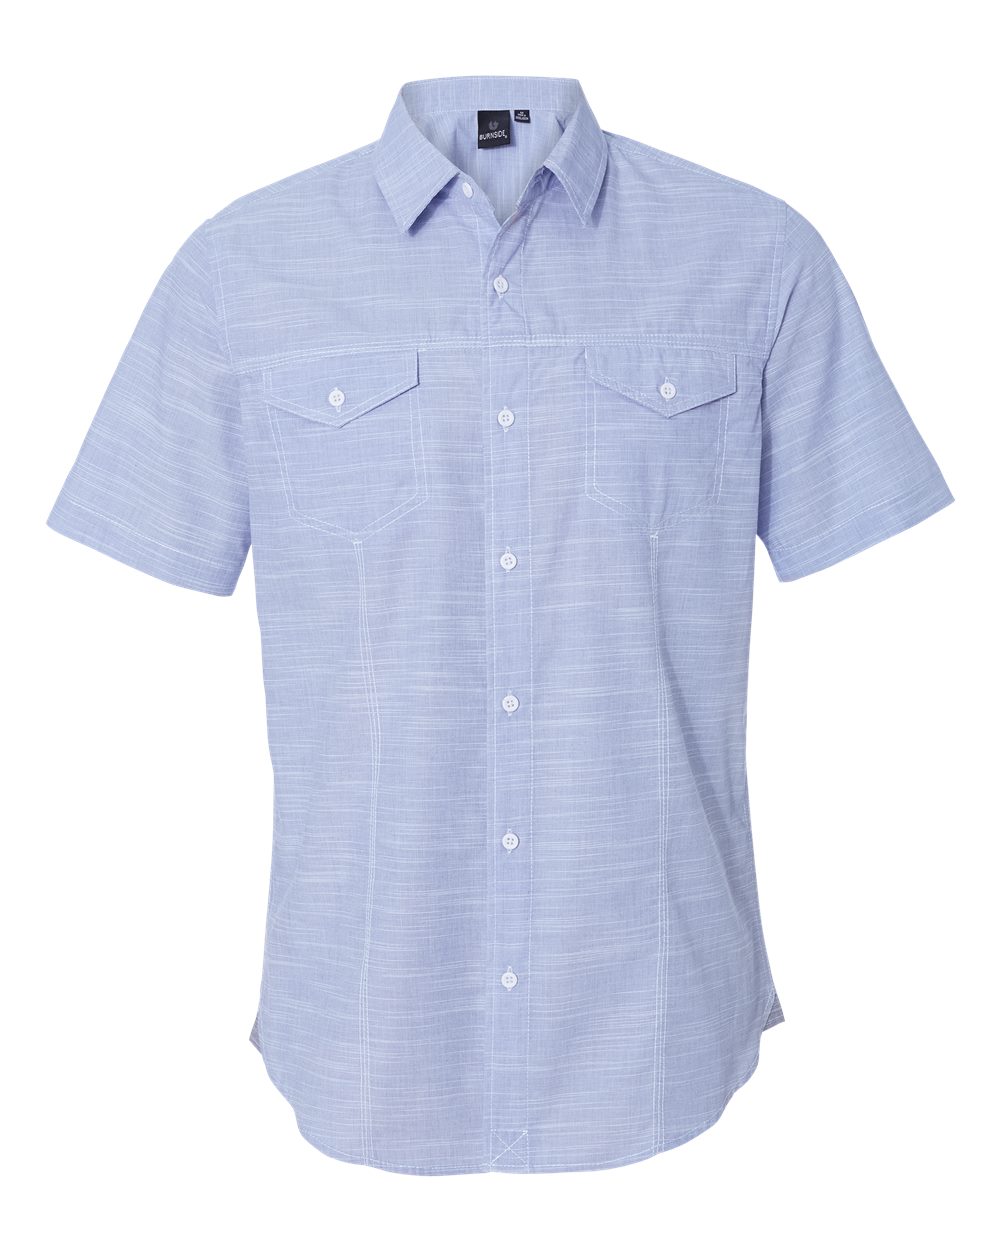 Textured Solid Short Sleeve Shirt - 9247-Burnside